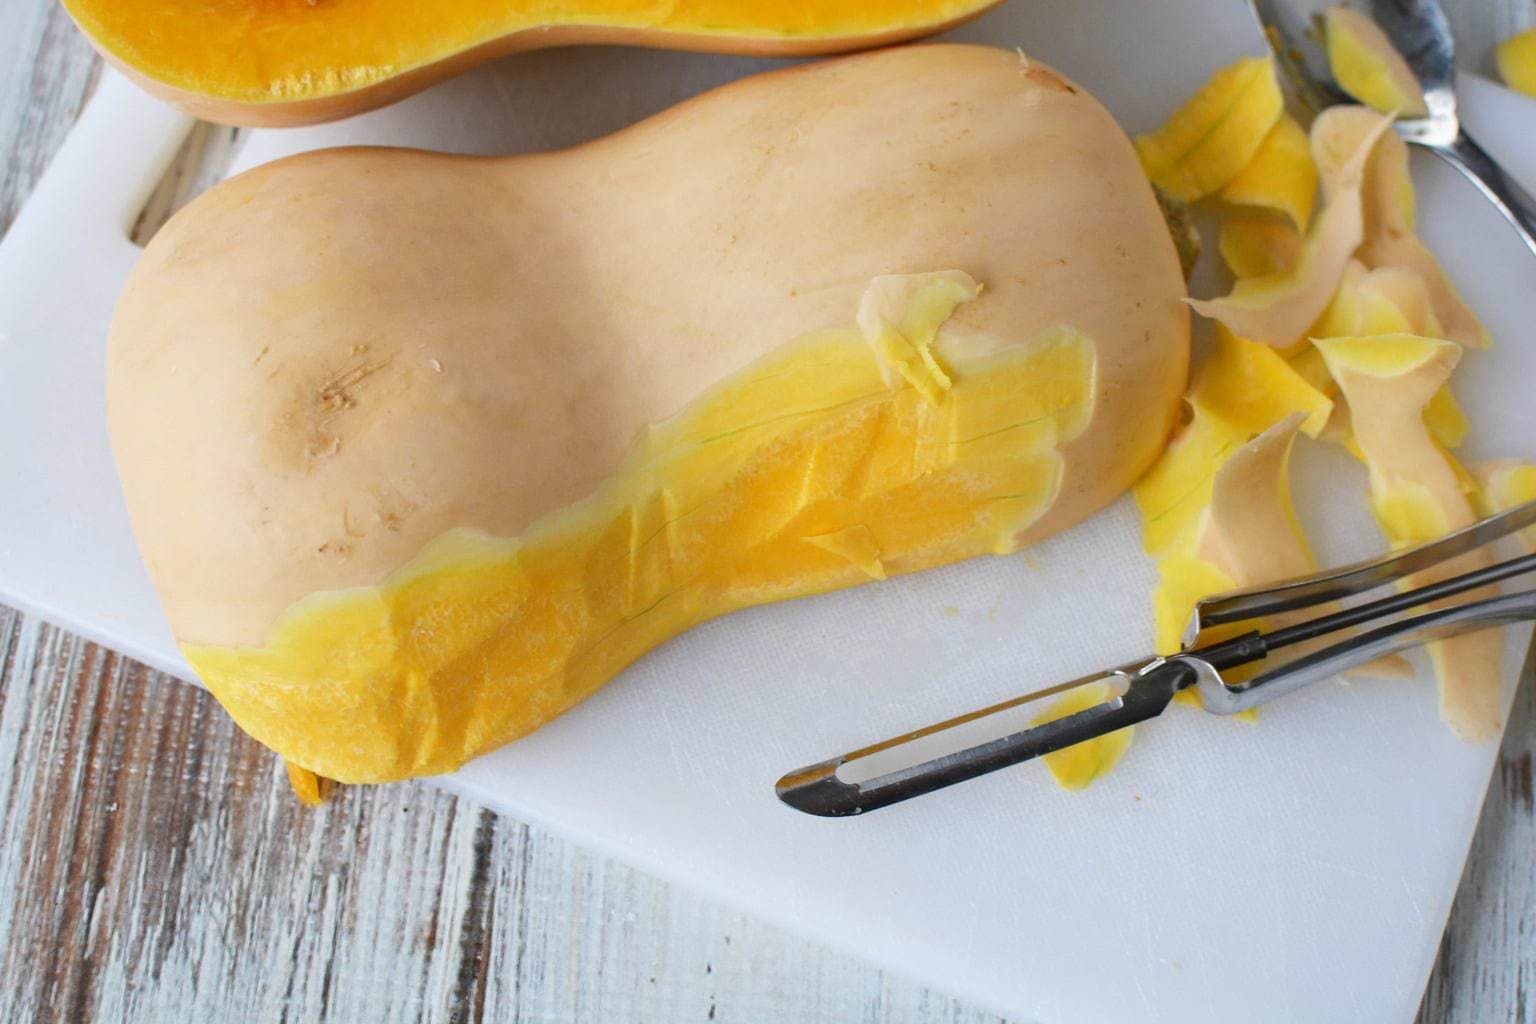 peeling skin from butternut squash